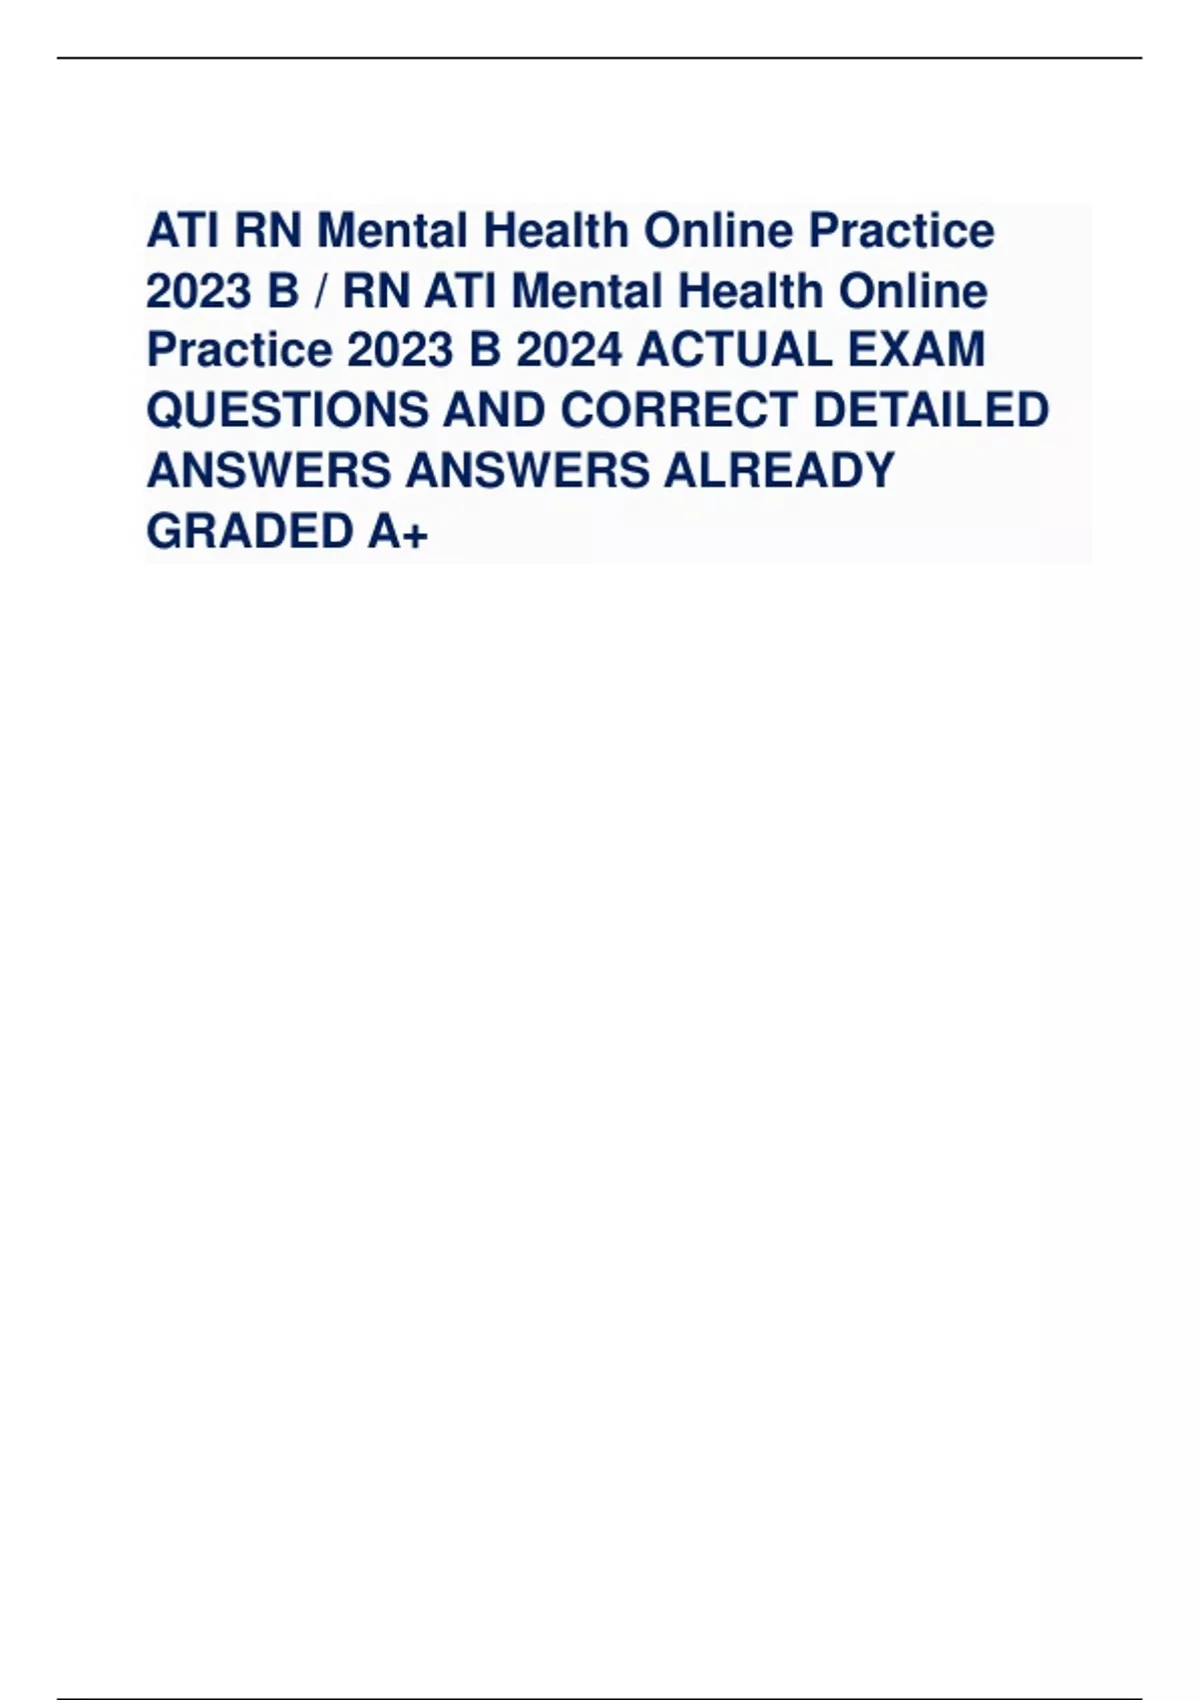 ATI RN Mental Health Online Practice 2023 B / RN ATI Mental Health